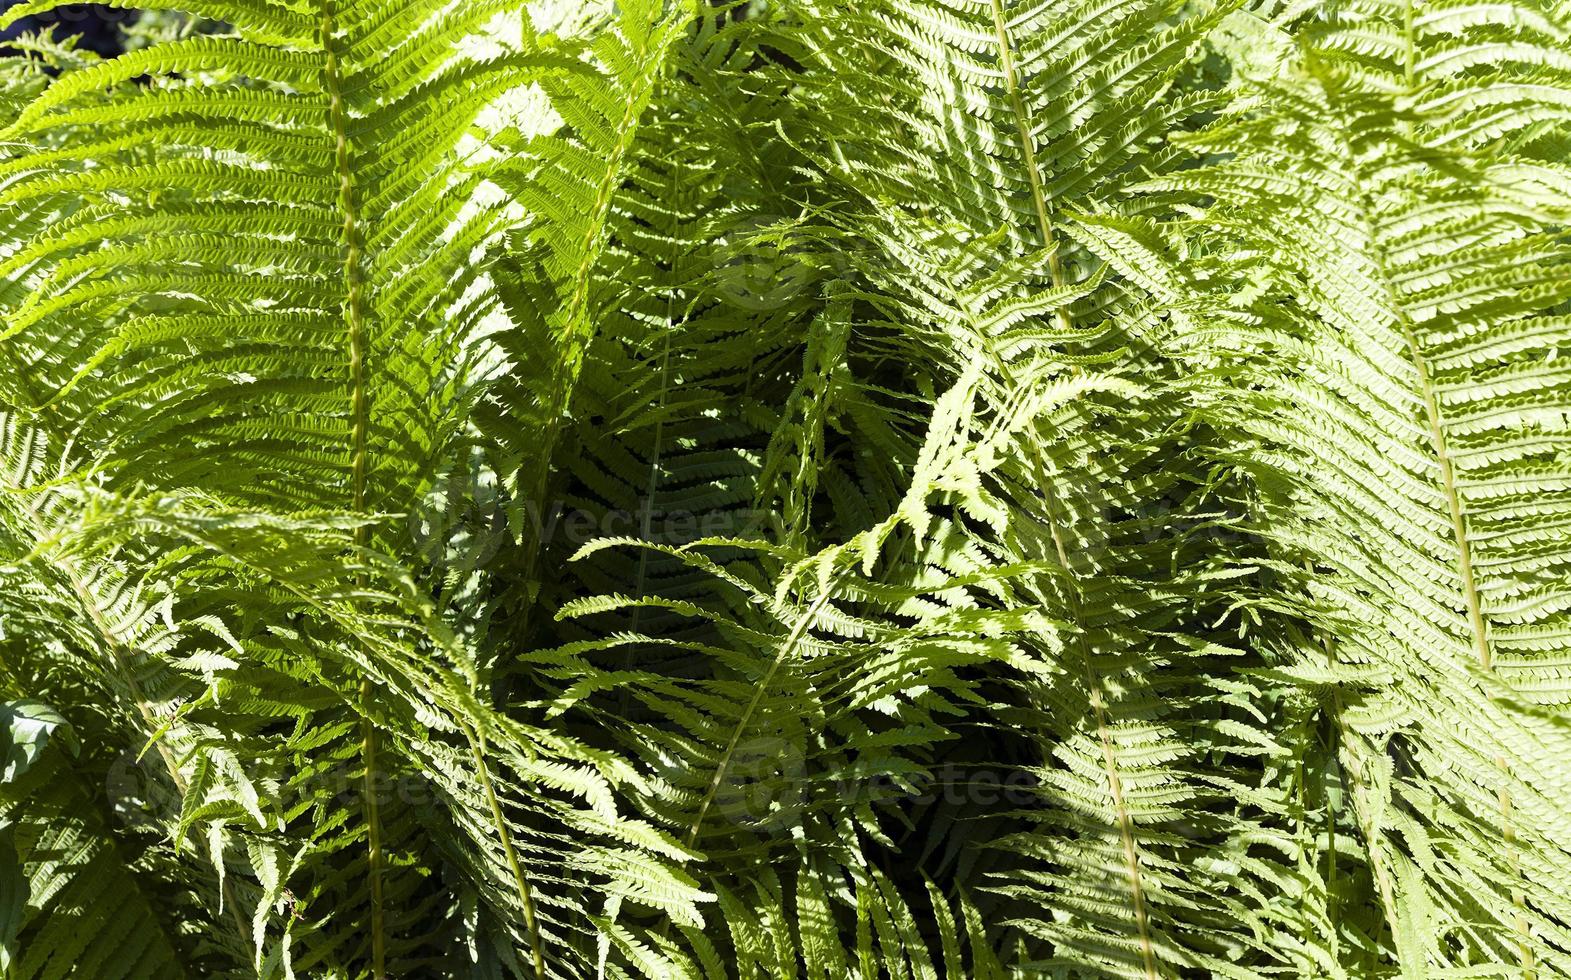 green fern close up photo